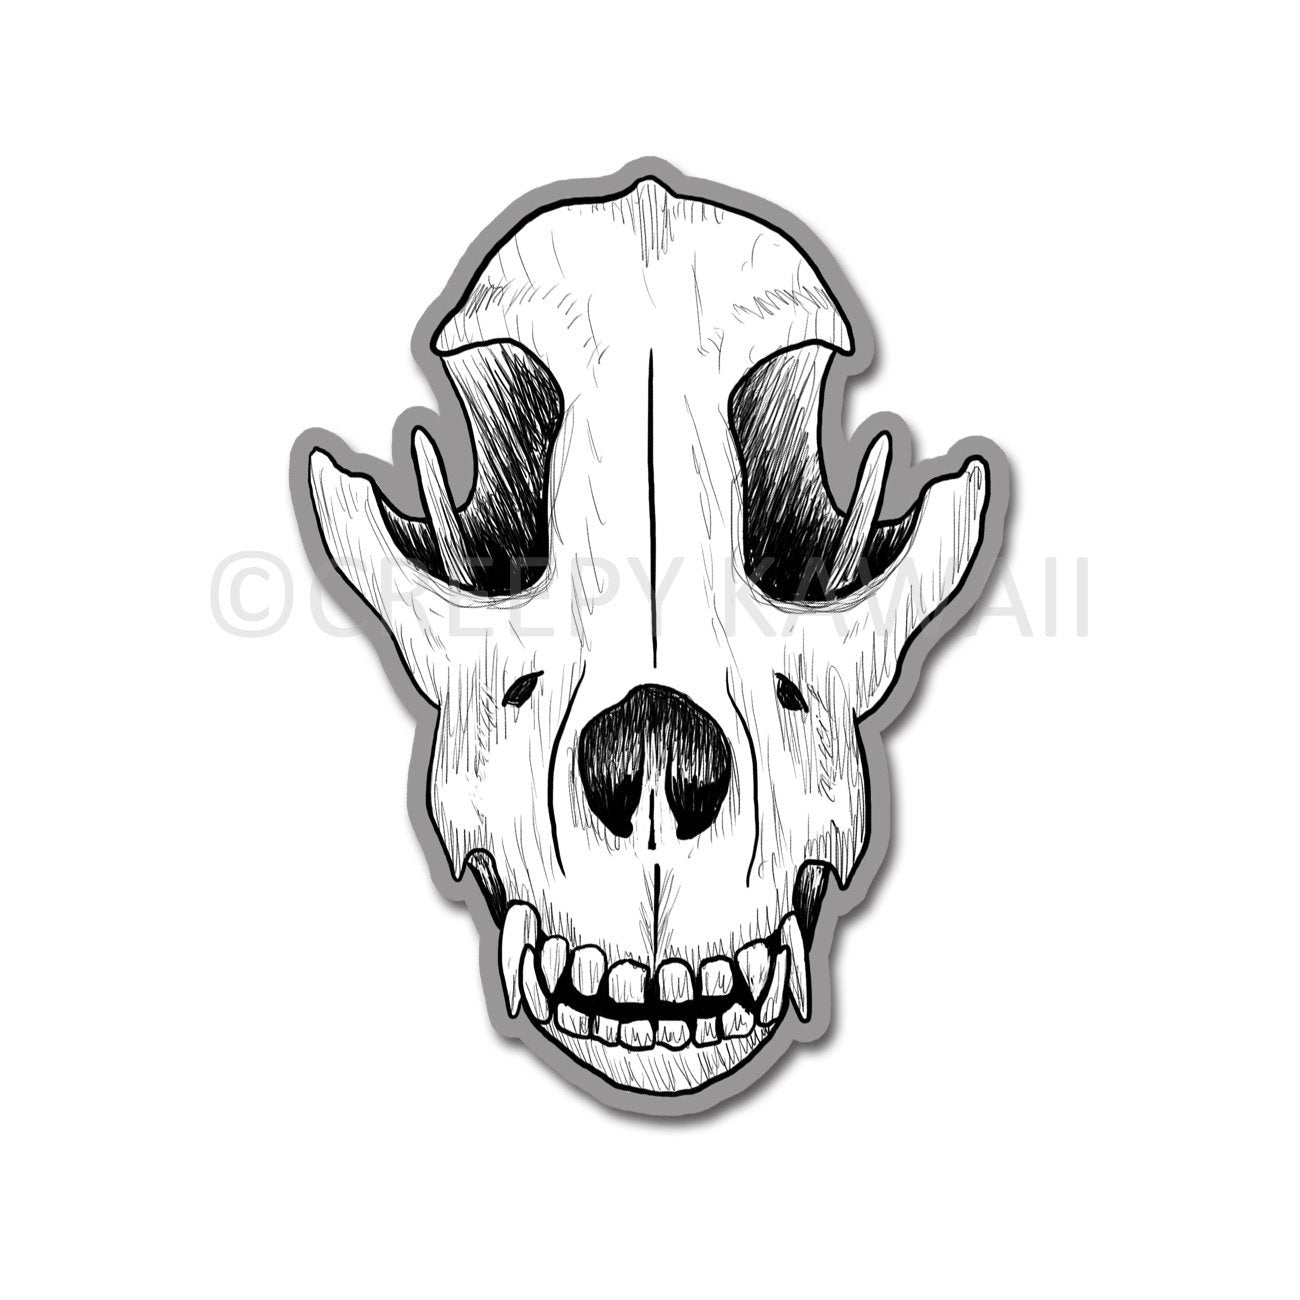 Wolf Skull - 3 Inch Weatherproof Vinyl Sticker - Creepy Kawaii